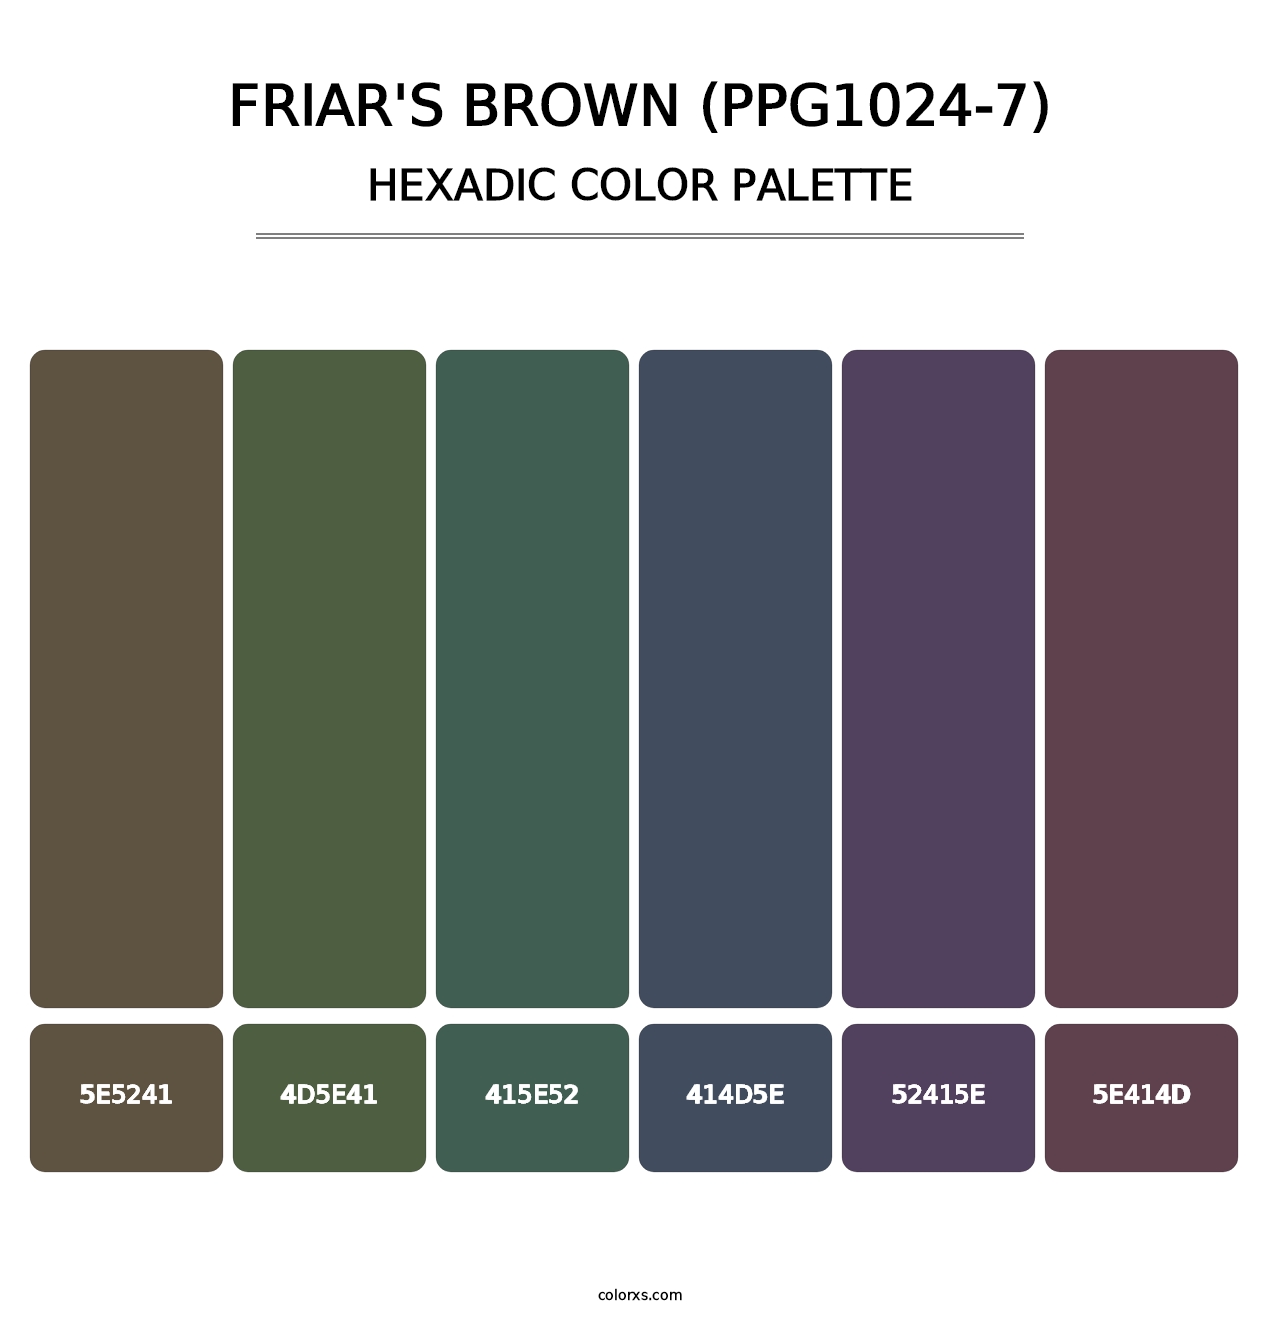 Friar's Brown (PPG1024-7) - Hexadic Color Palette